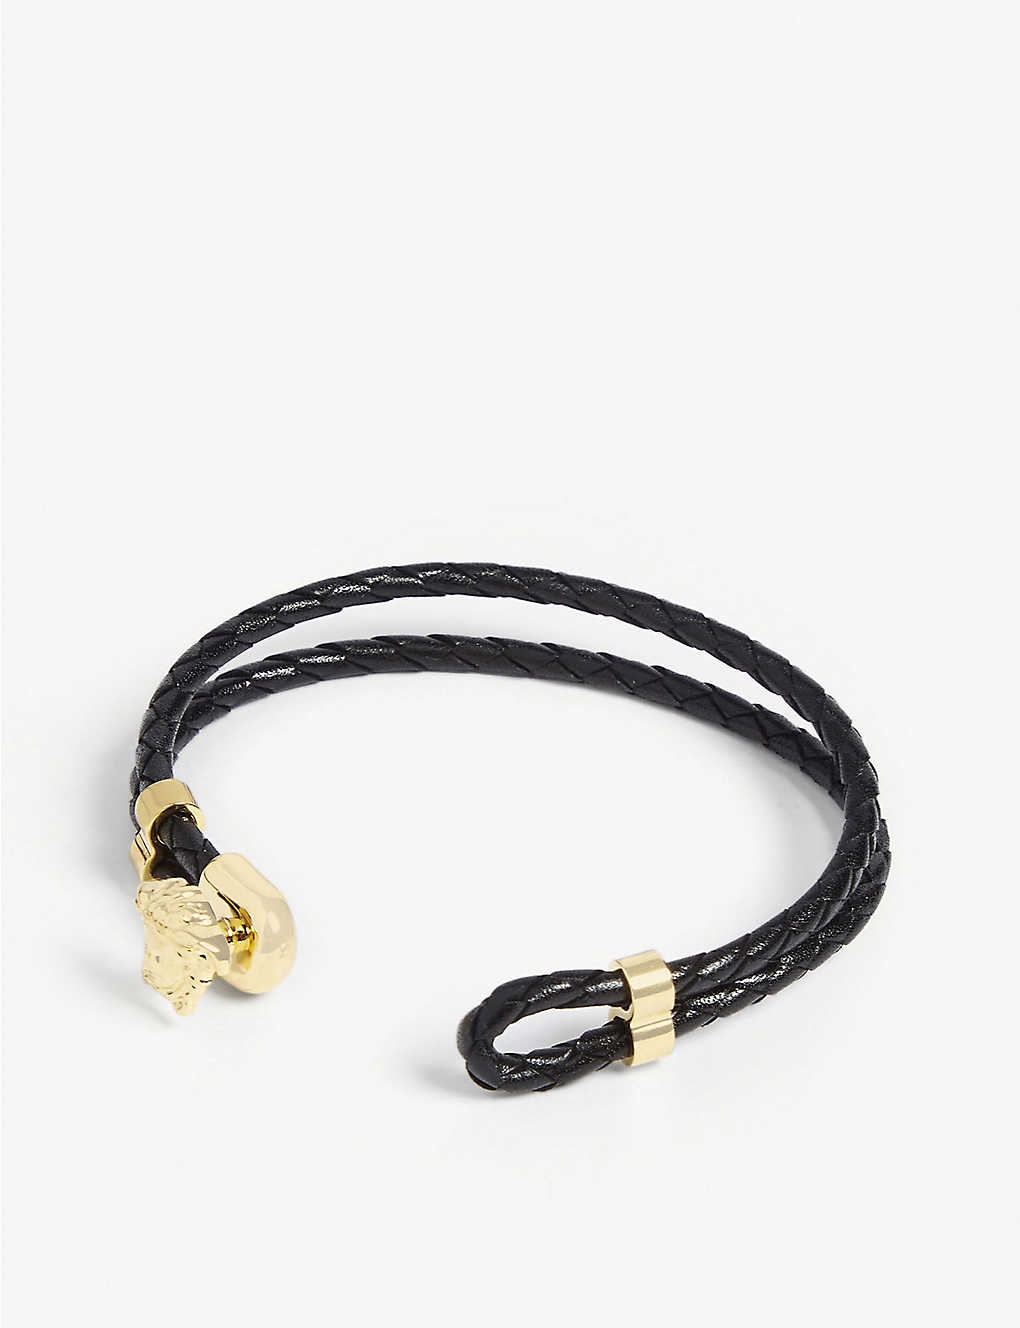 Medusa braided leather bracelet - 3